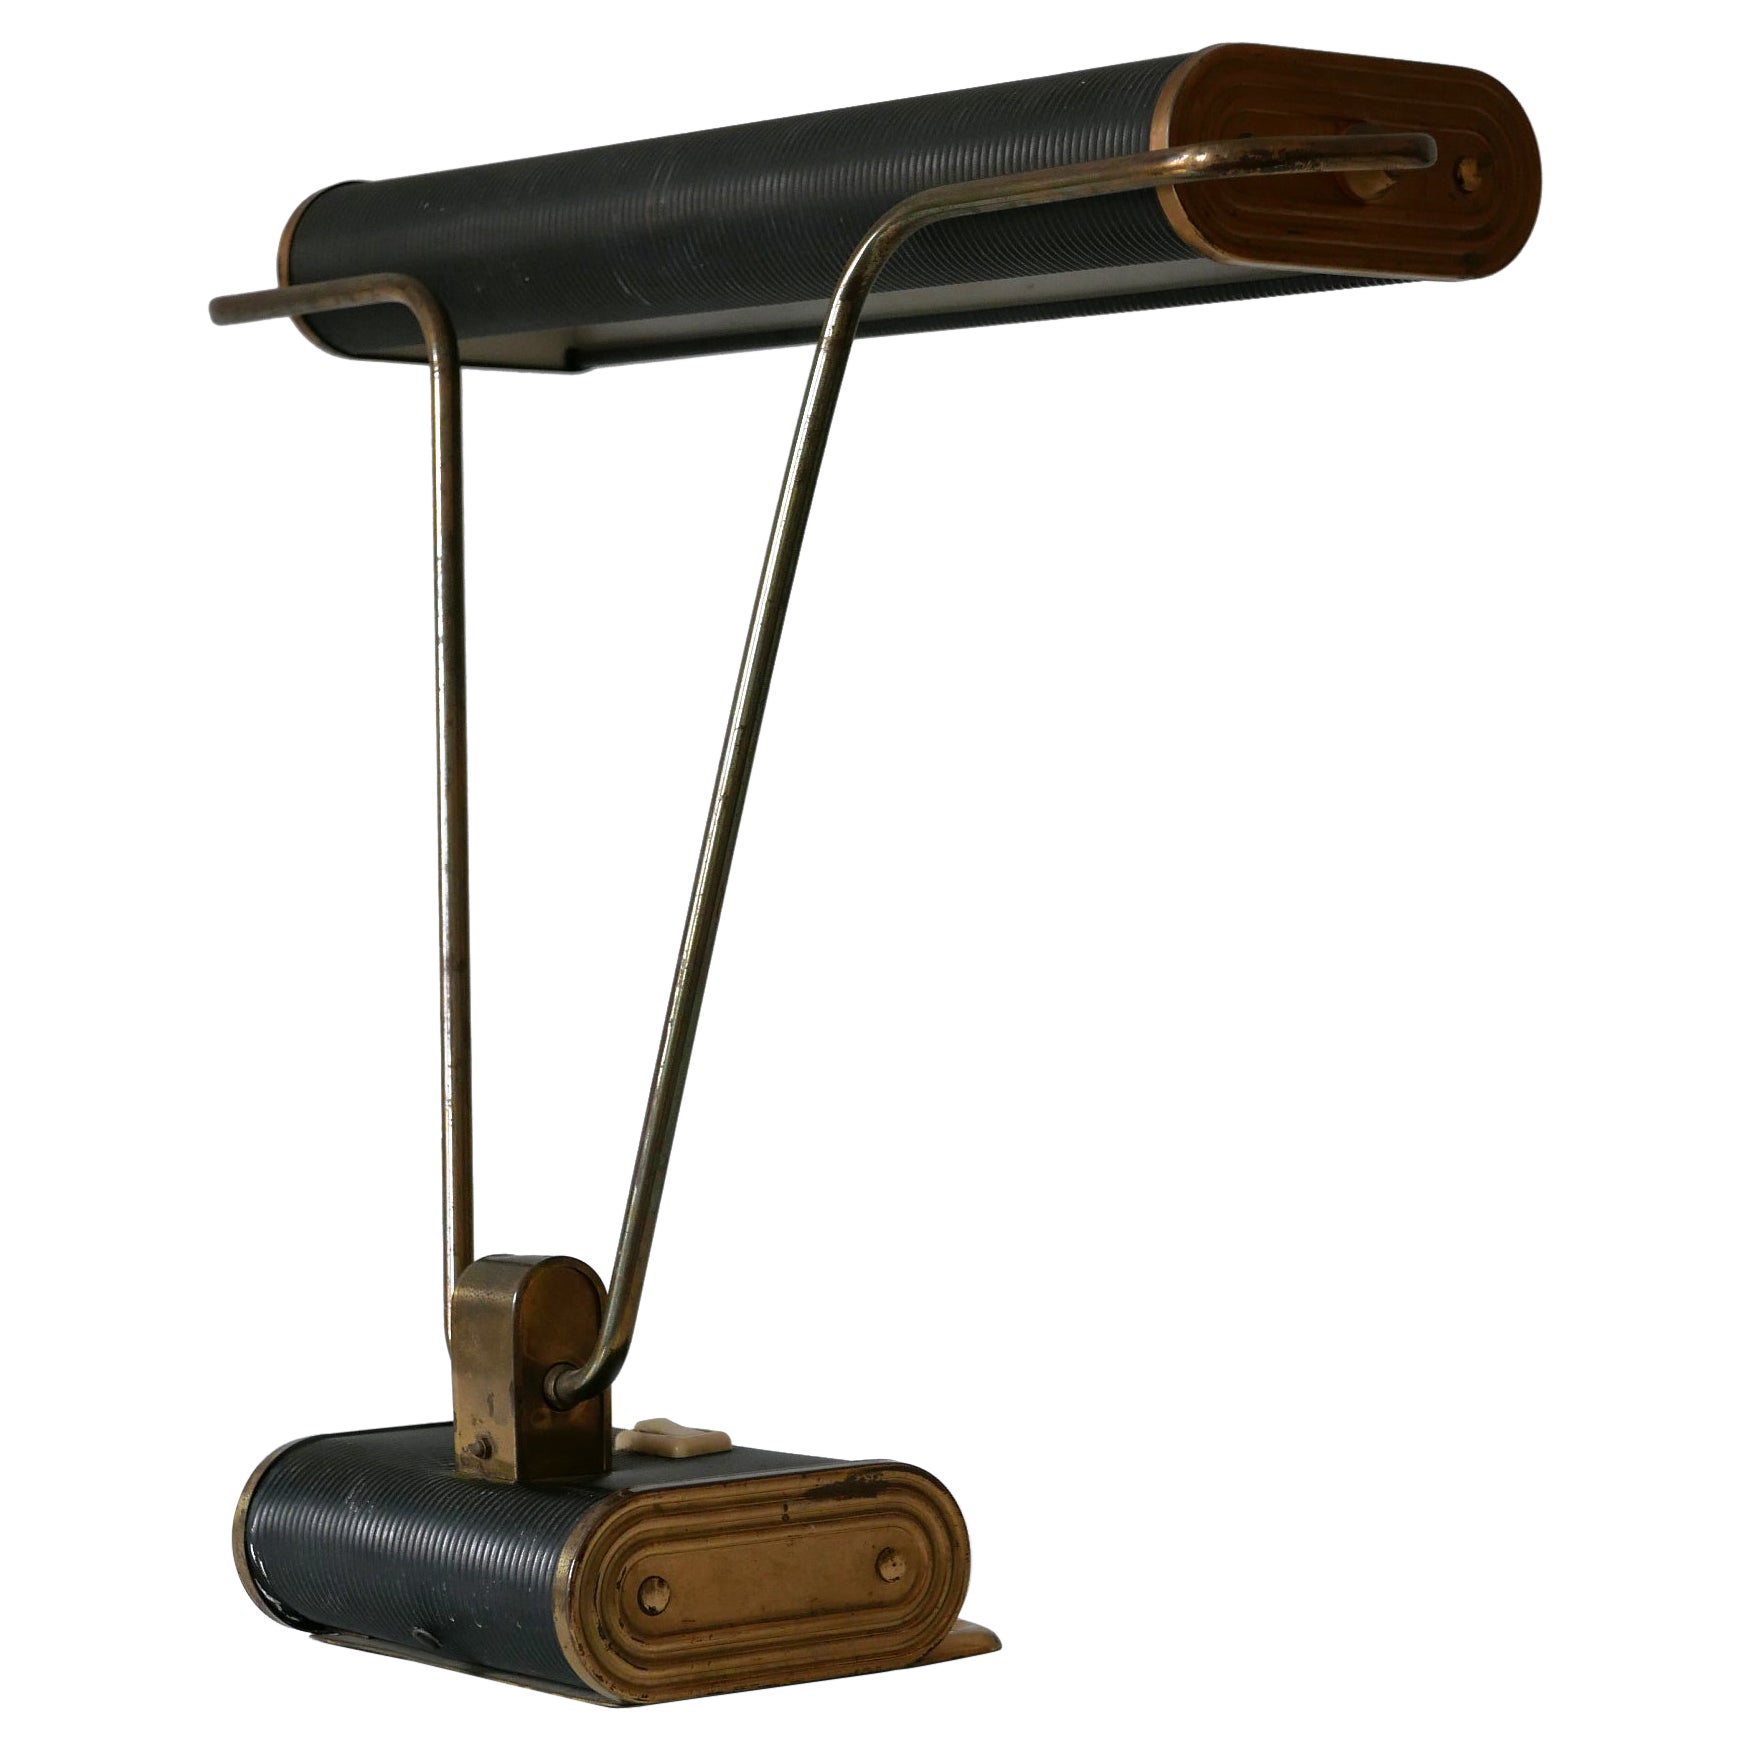 Art Deco Table Lamp or Desk Light 'No 71' by André Mounique for Jumo 1930s